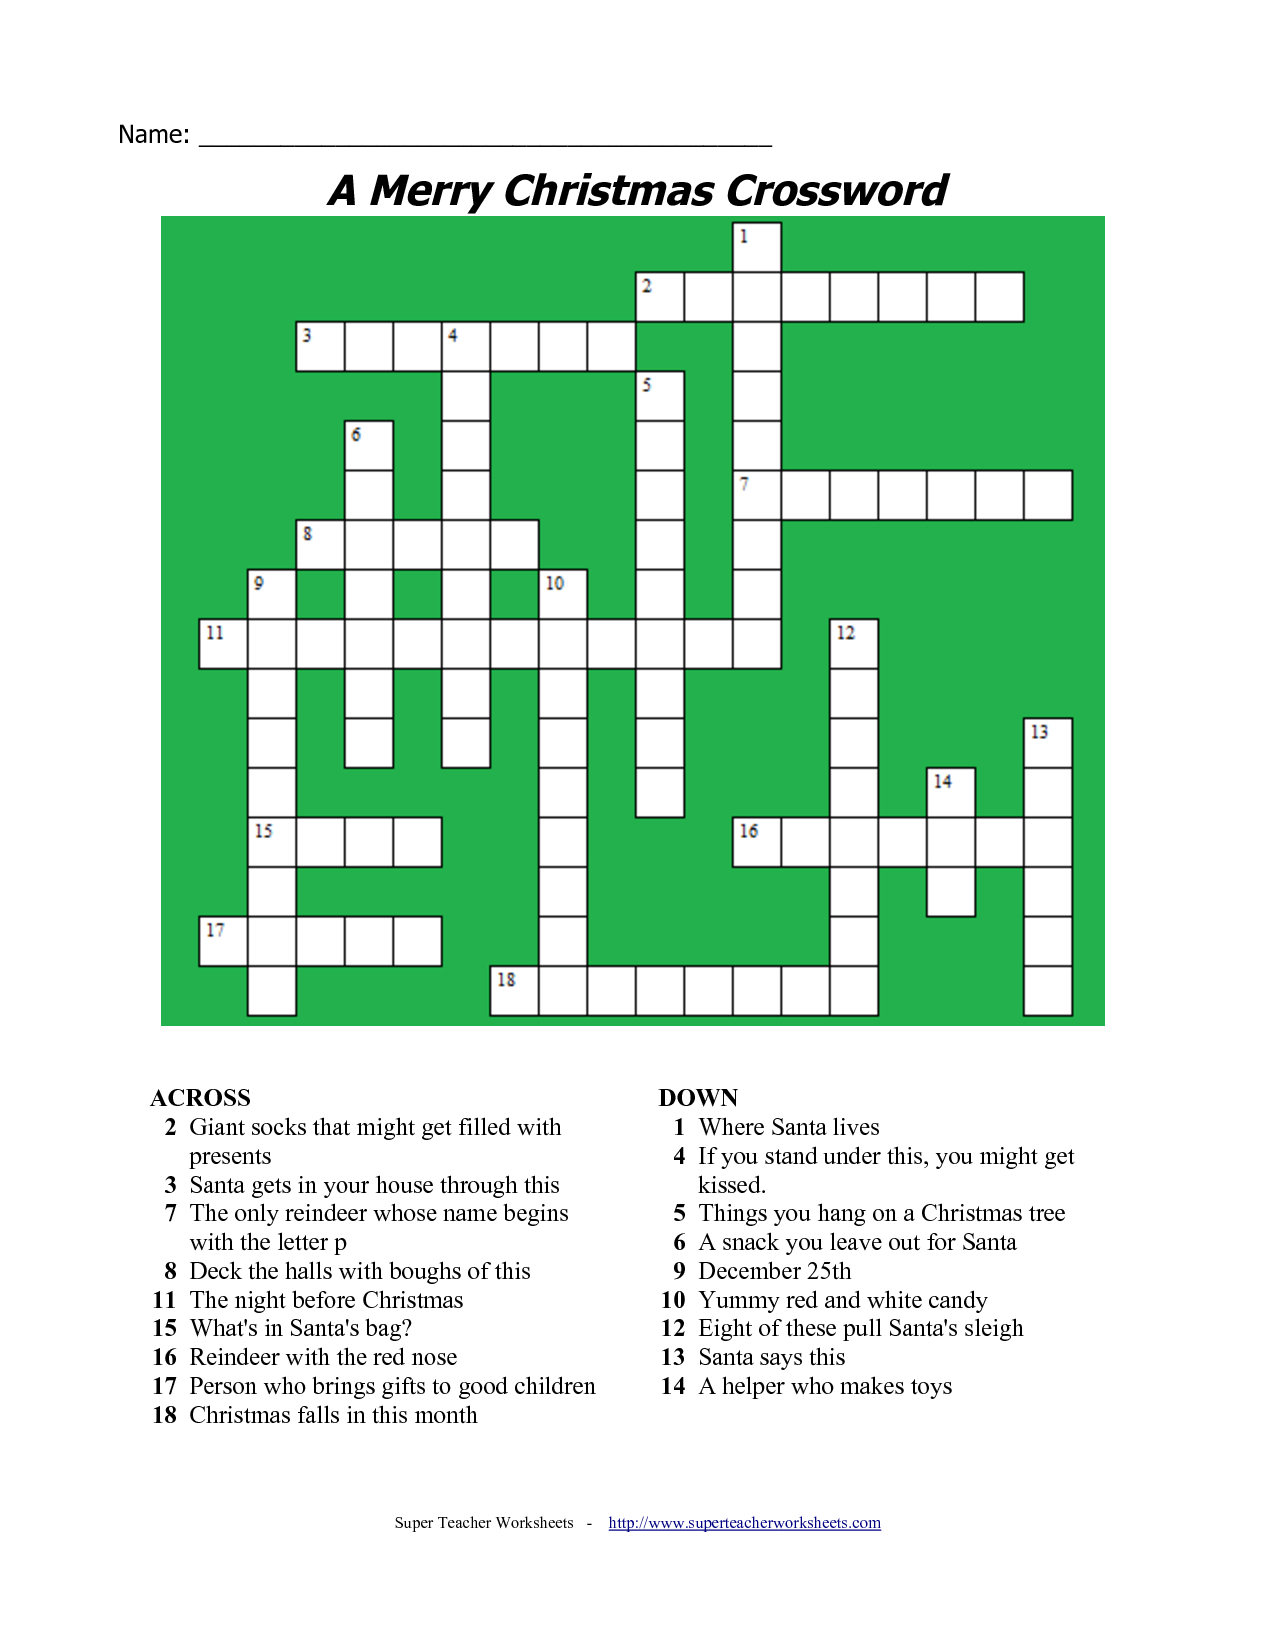 20 Fun Printable Christmas Crossword Puzzles | Kittybabylove - Printable English Crossword Puzzles With Answers Pdf